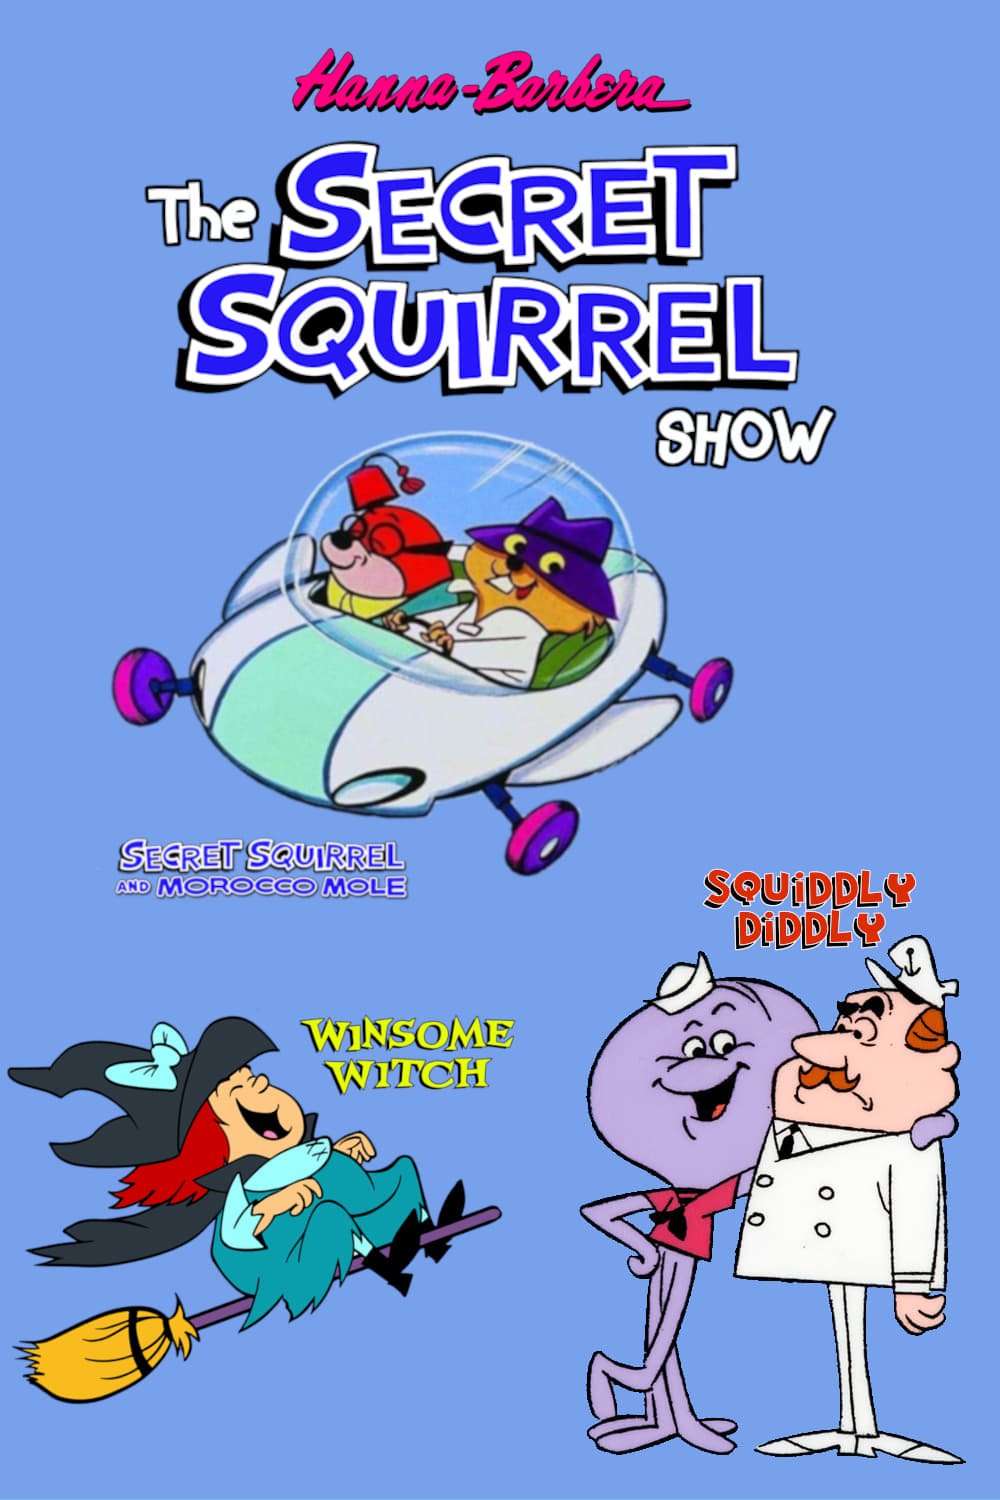 The Secret Squirrel Show (1965)